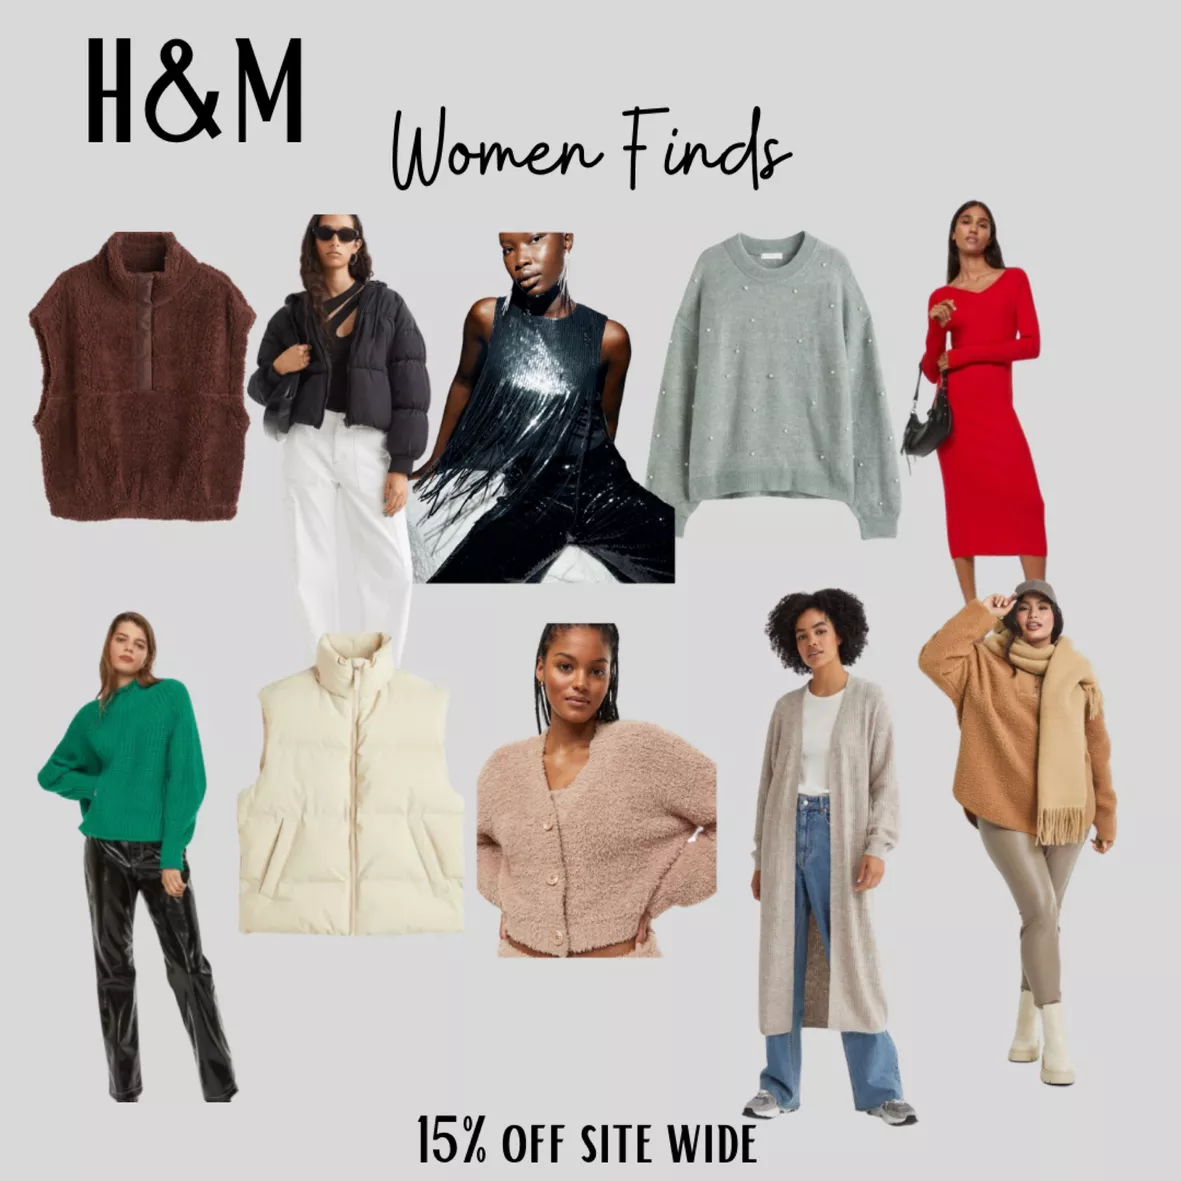 female h&m clothes